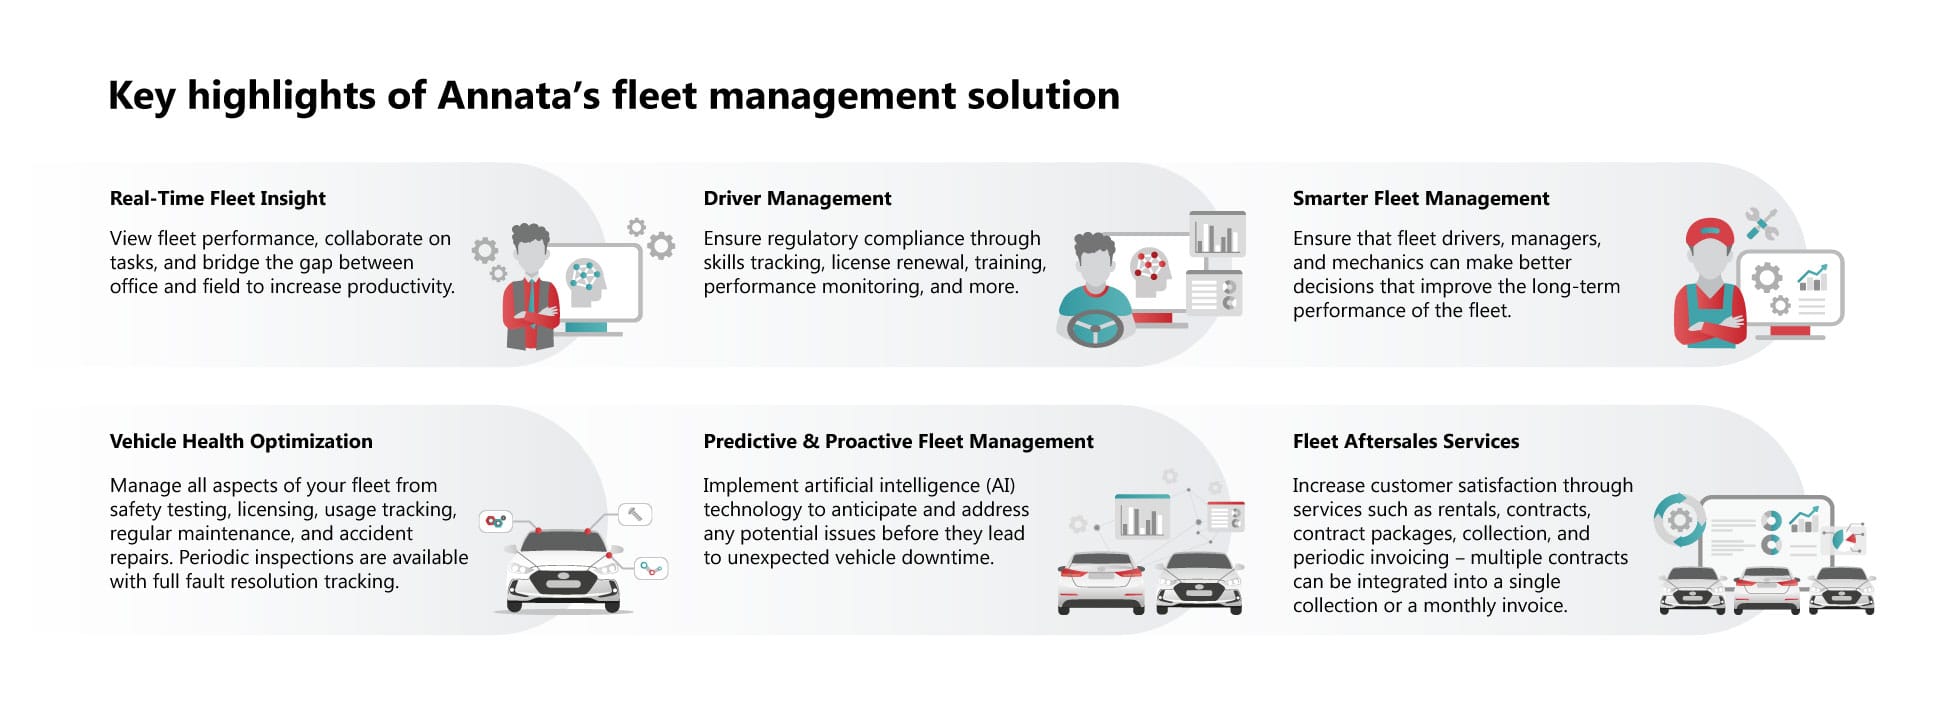 Key highlights of Annata's fleet management solution